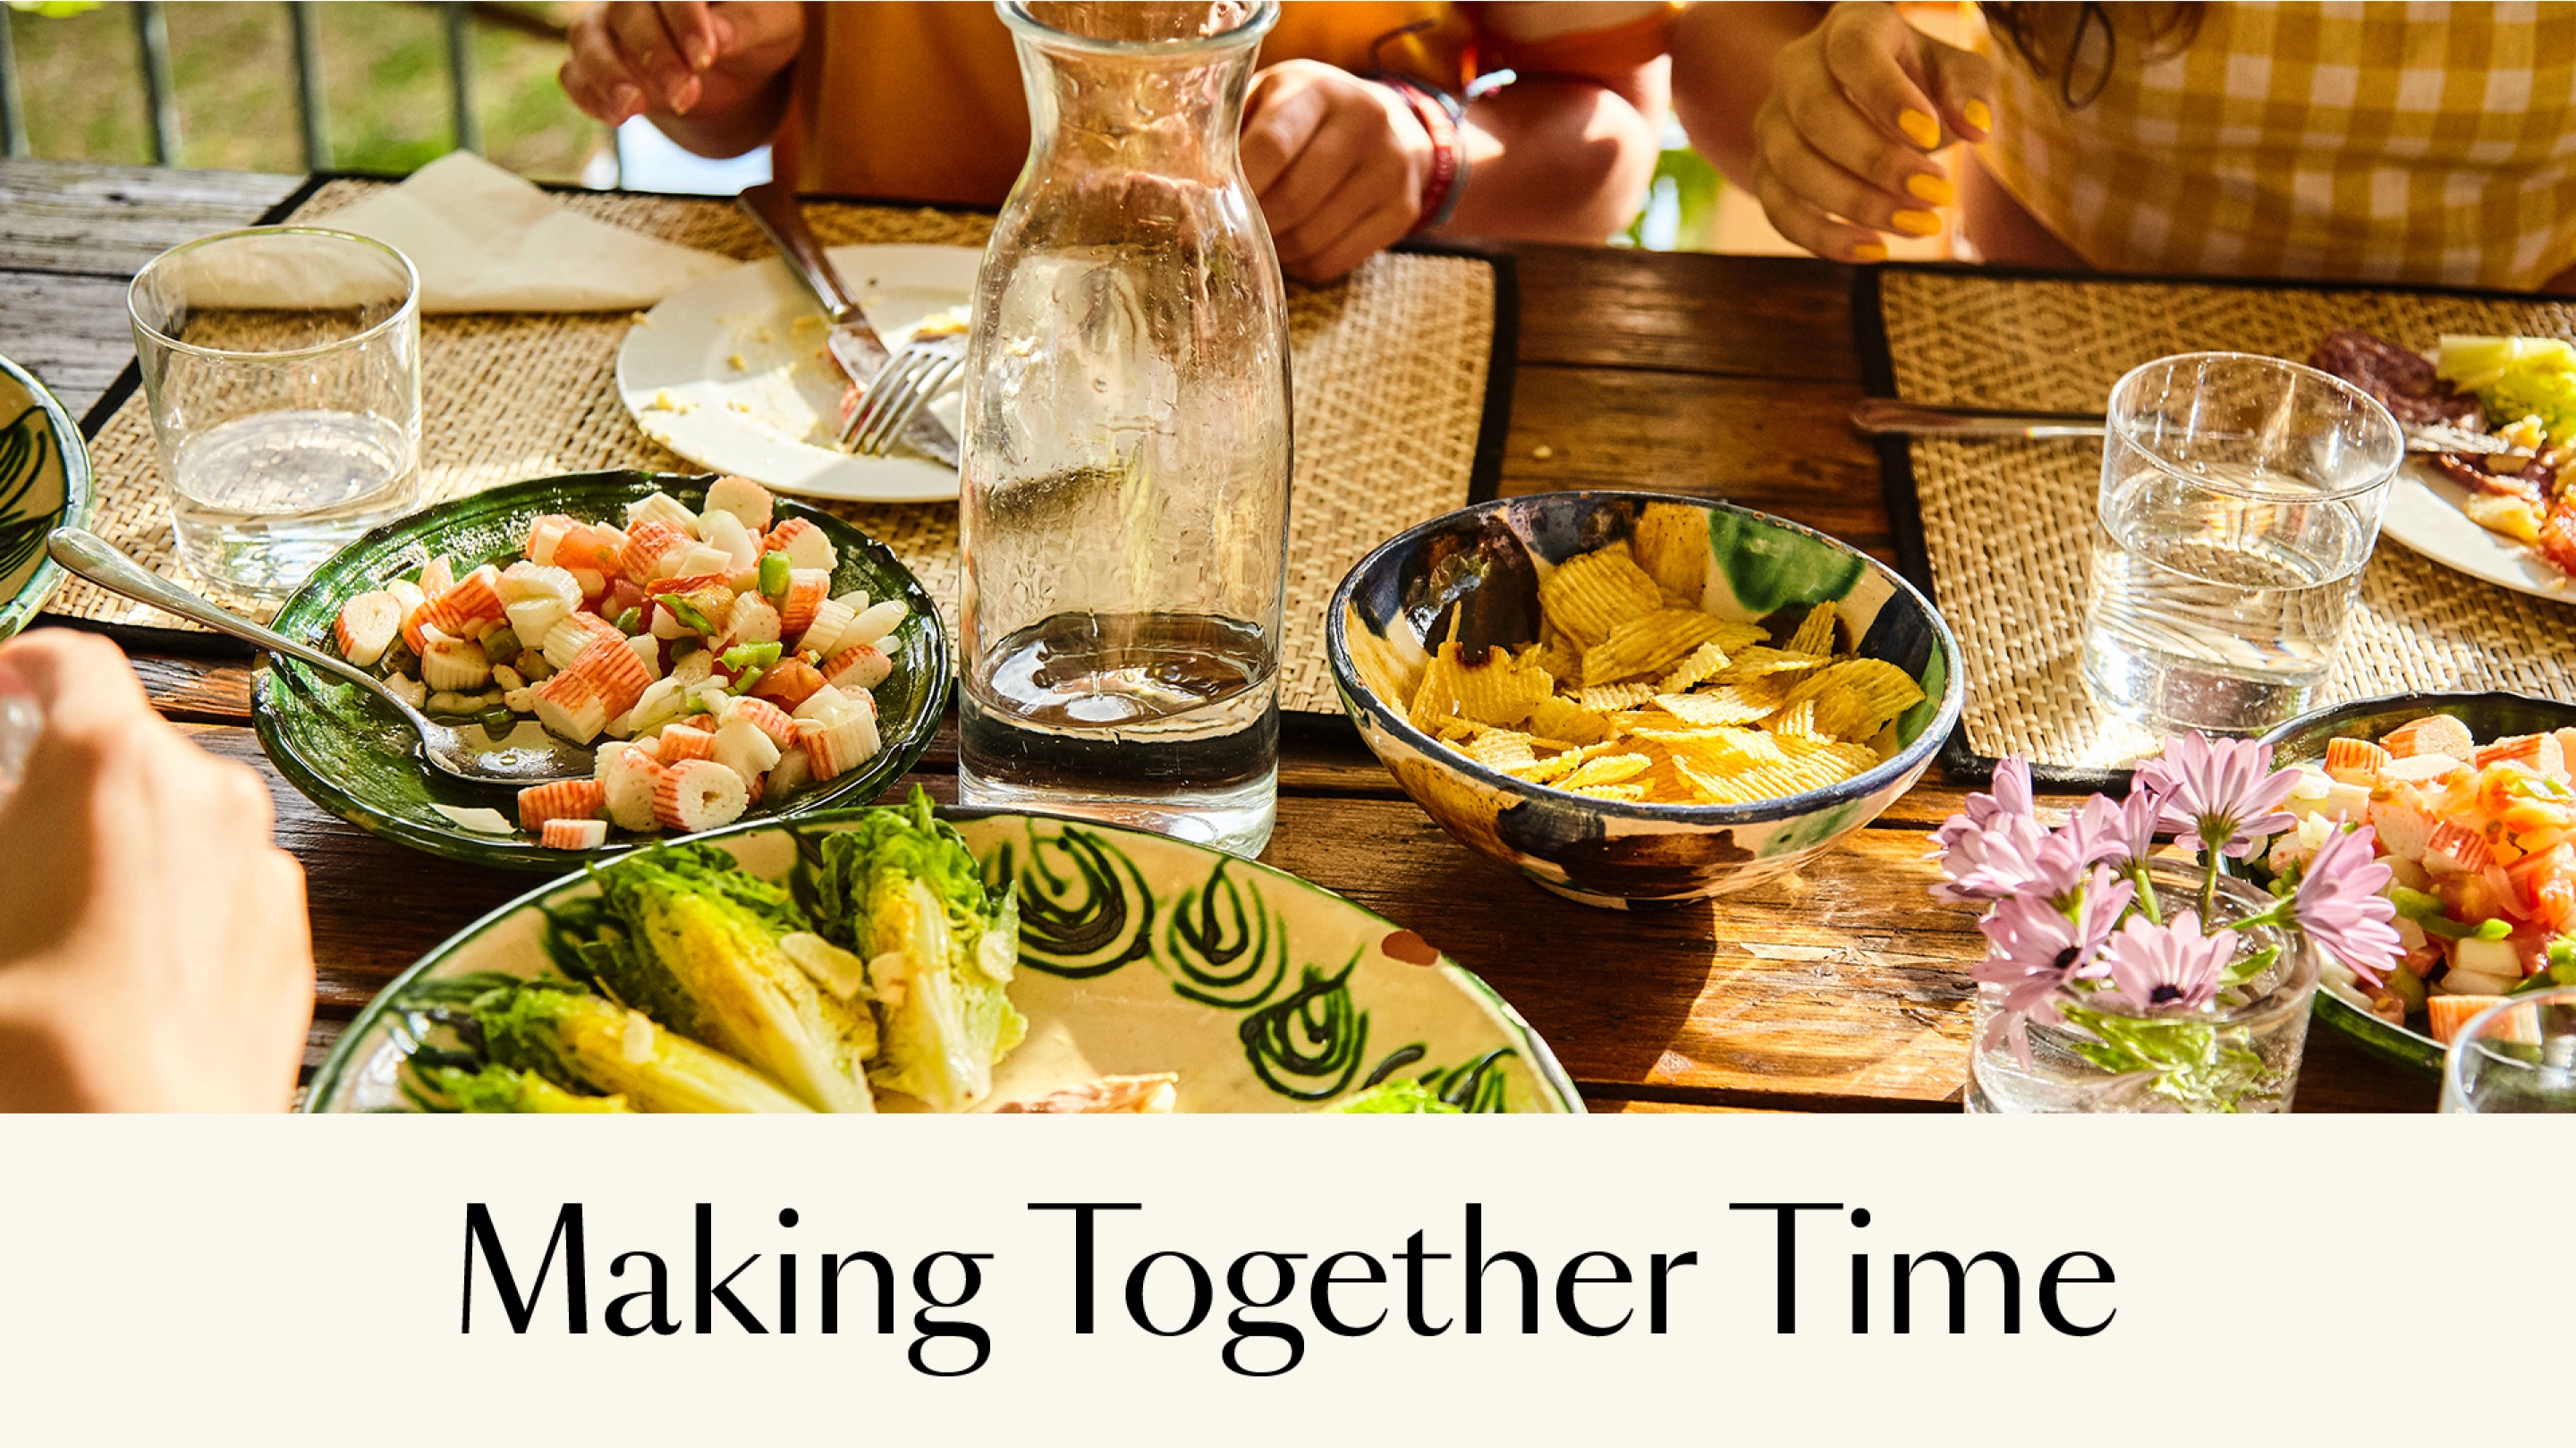 Making Together Time concept 